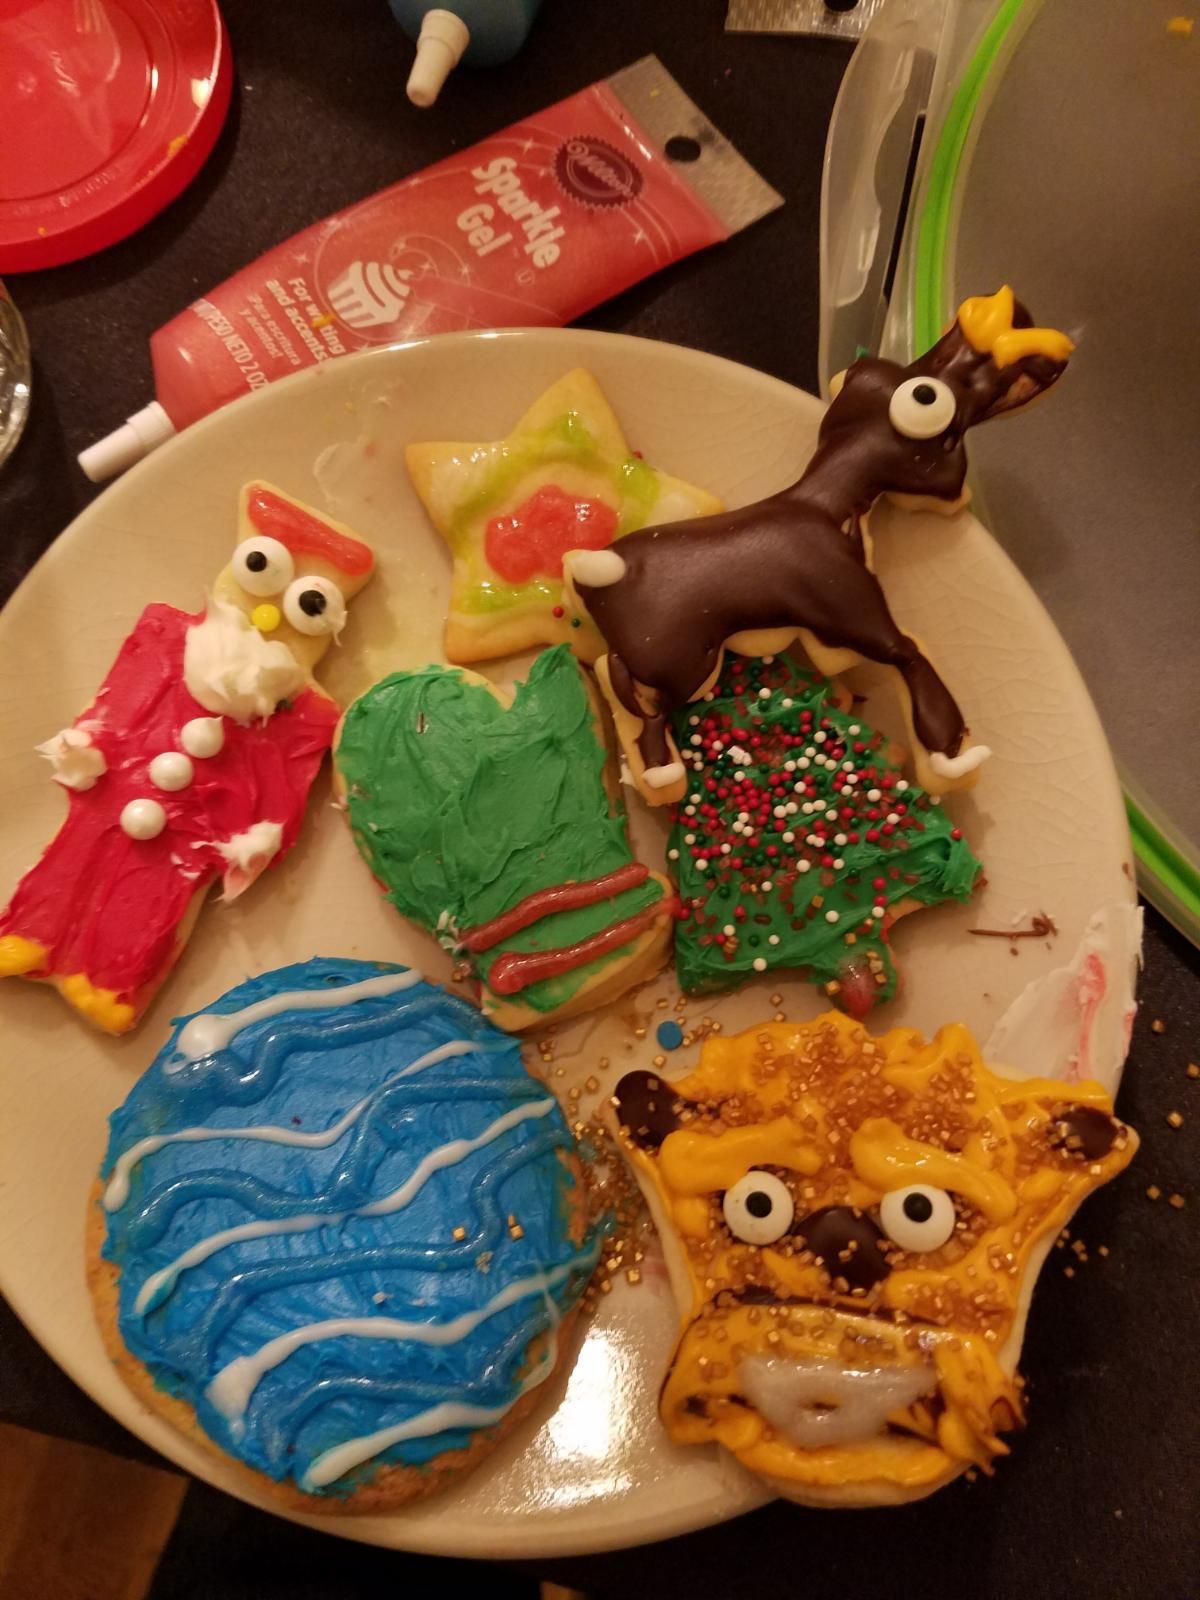 My boyfriend said he made holiday cookies...